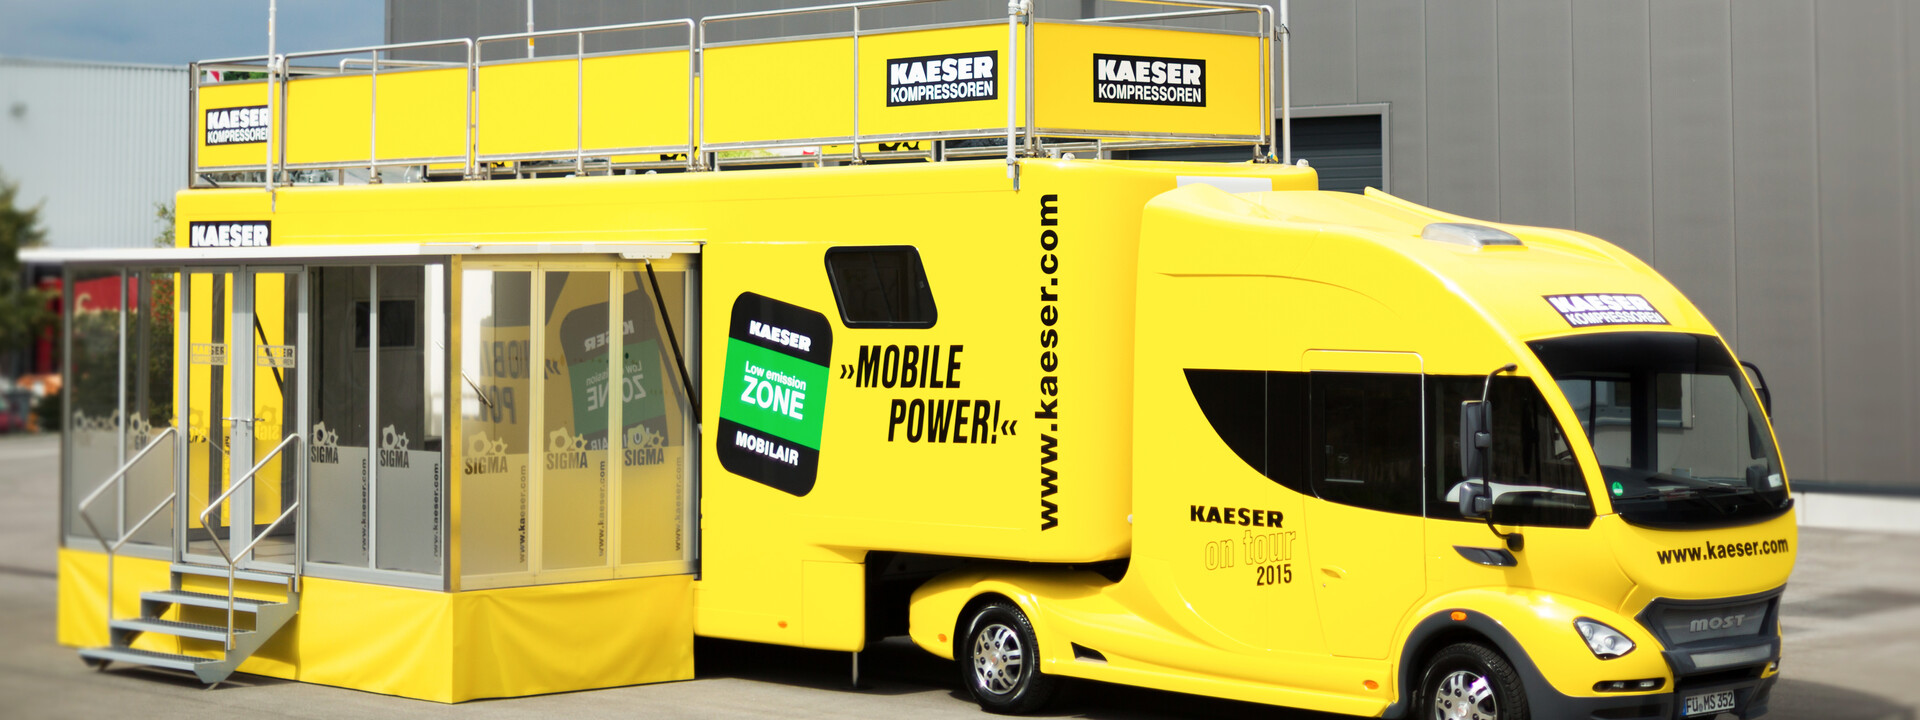 Kaeser Roadshow-Truck